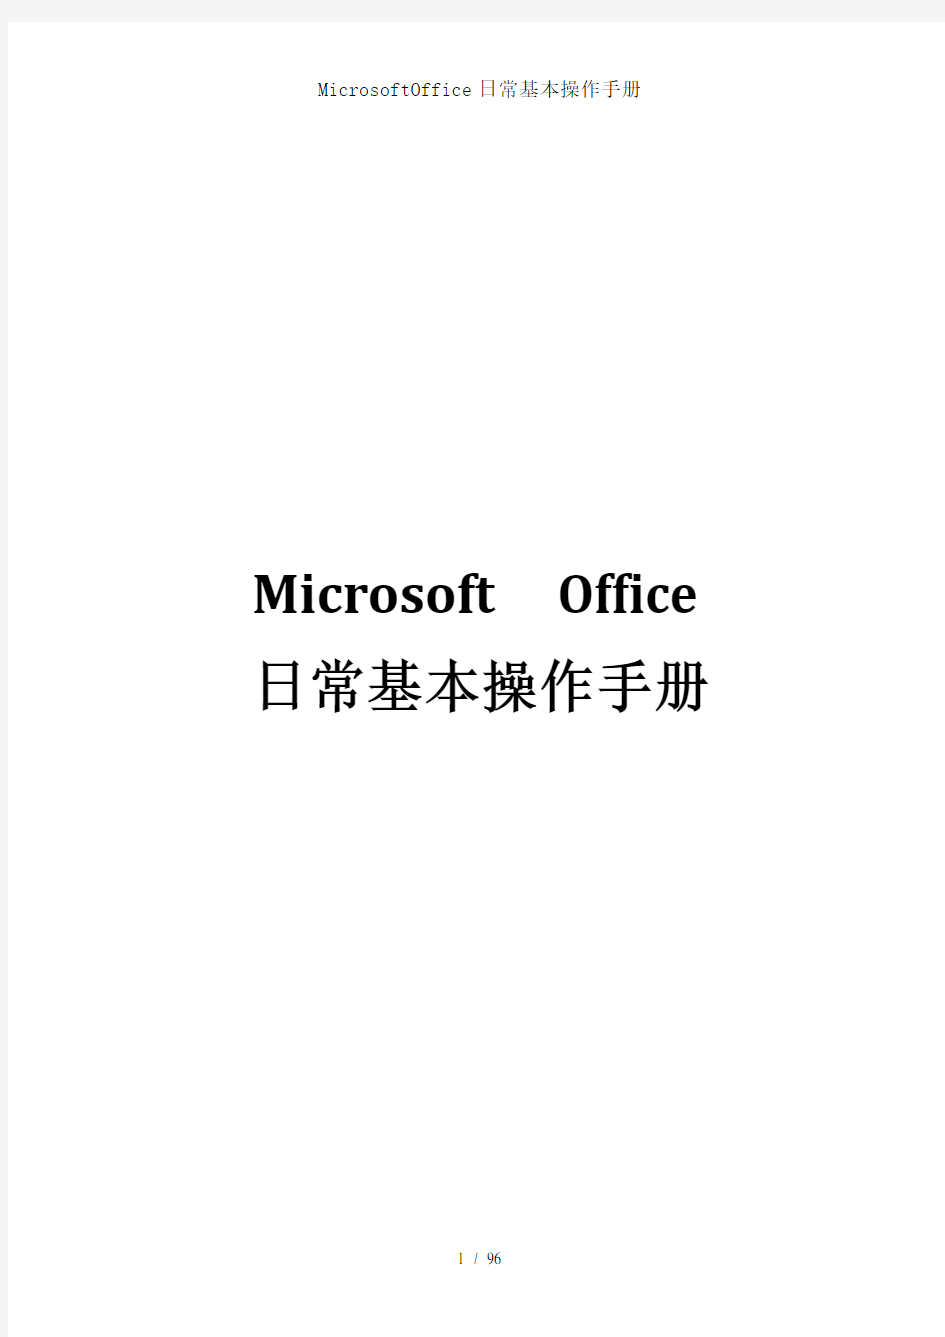 MicrosoftOffice日常基本操作手册